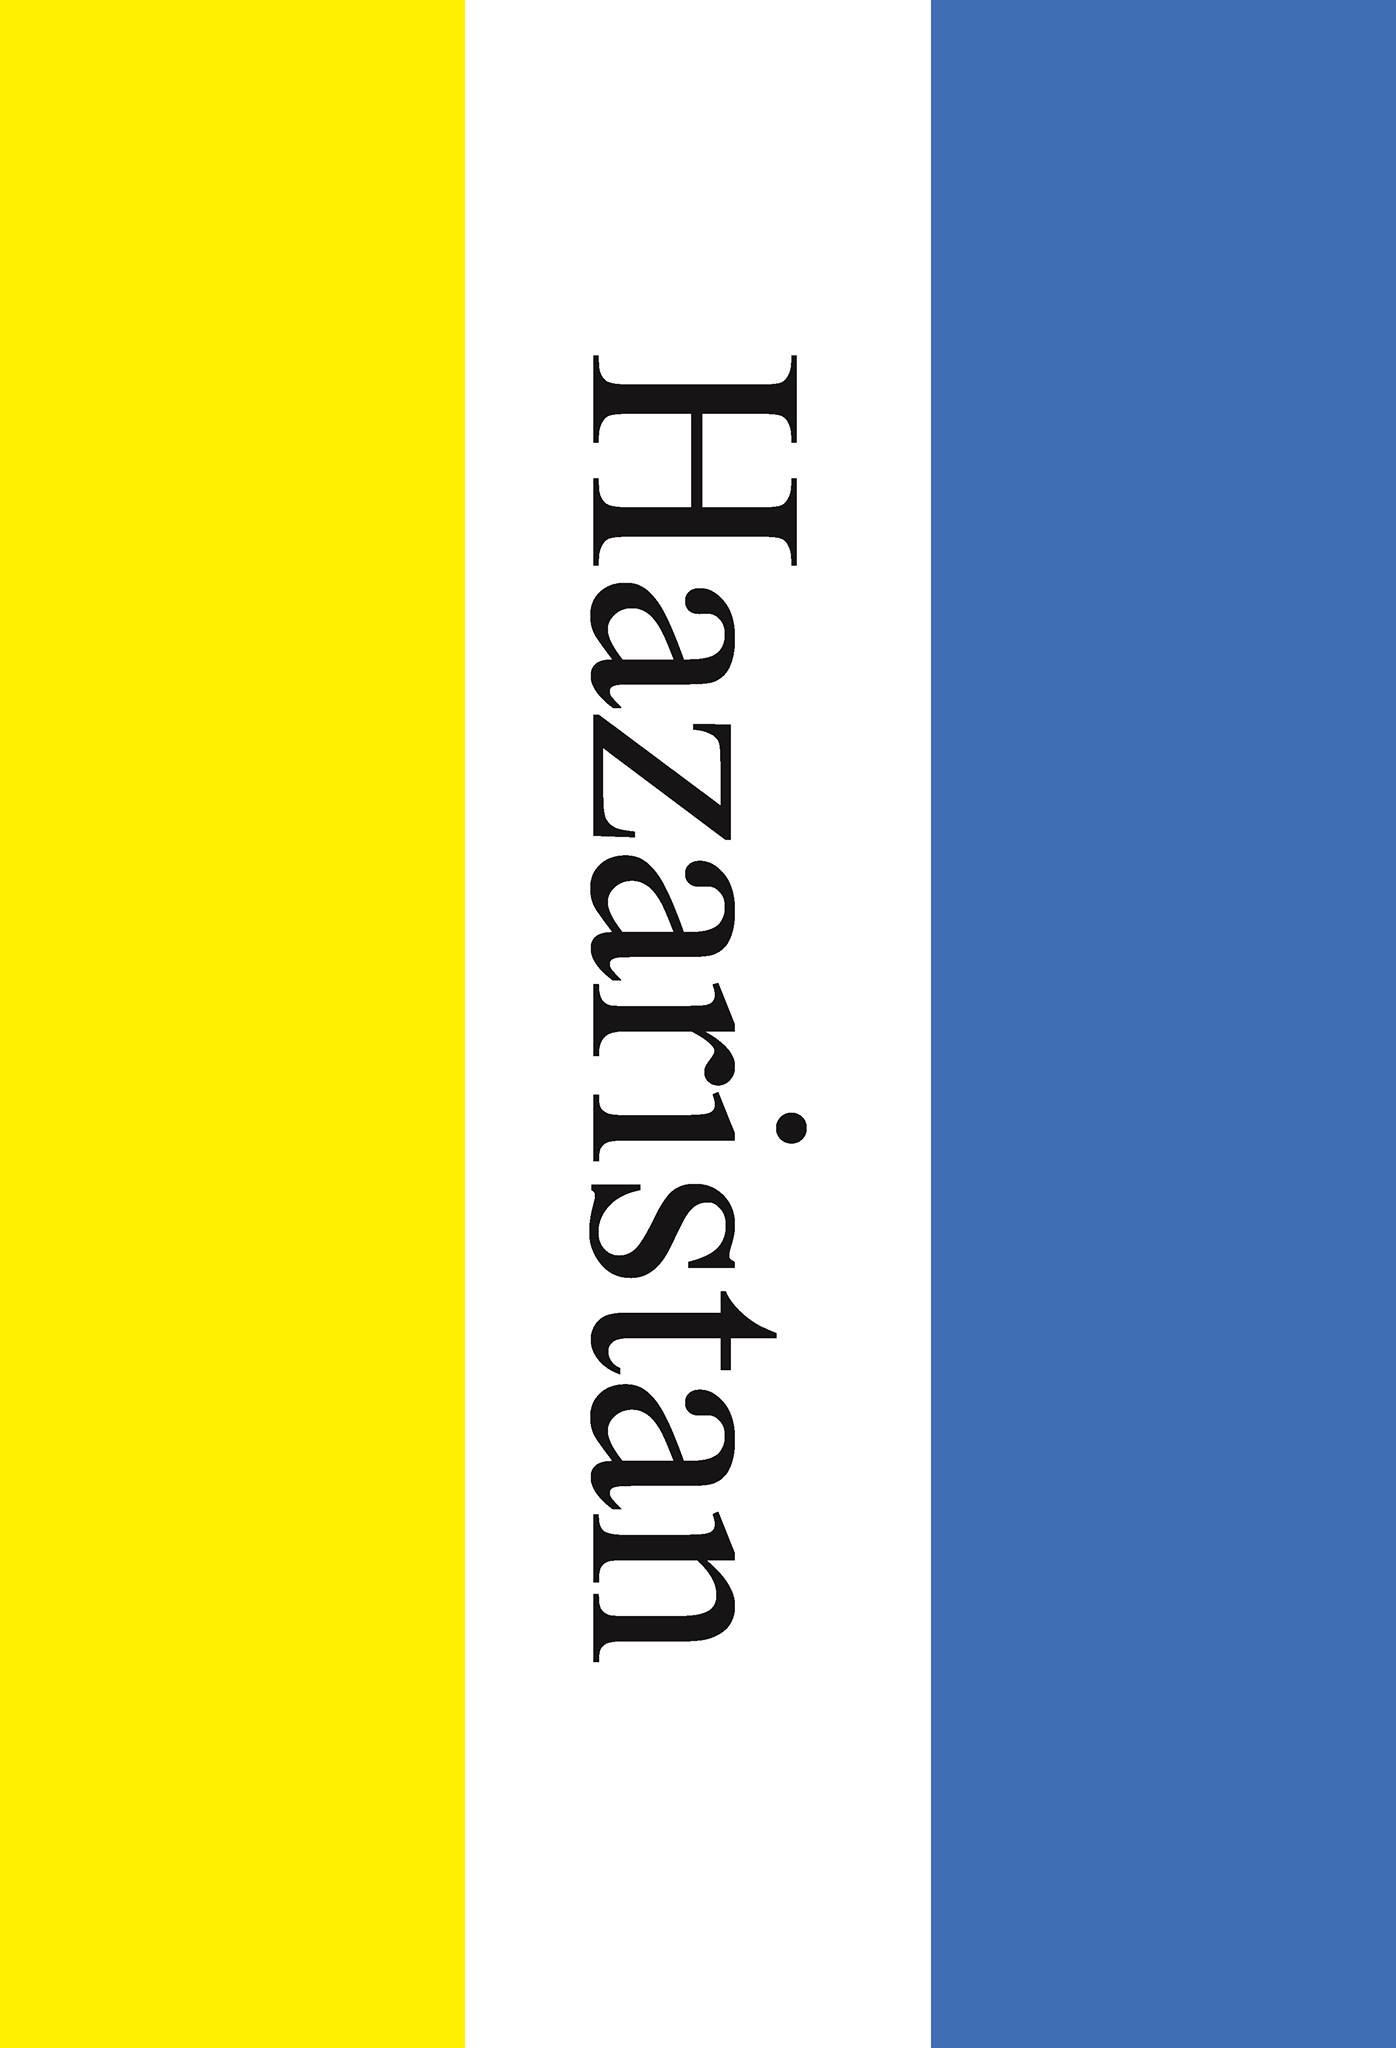 hazaristanflagwebversion1